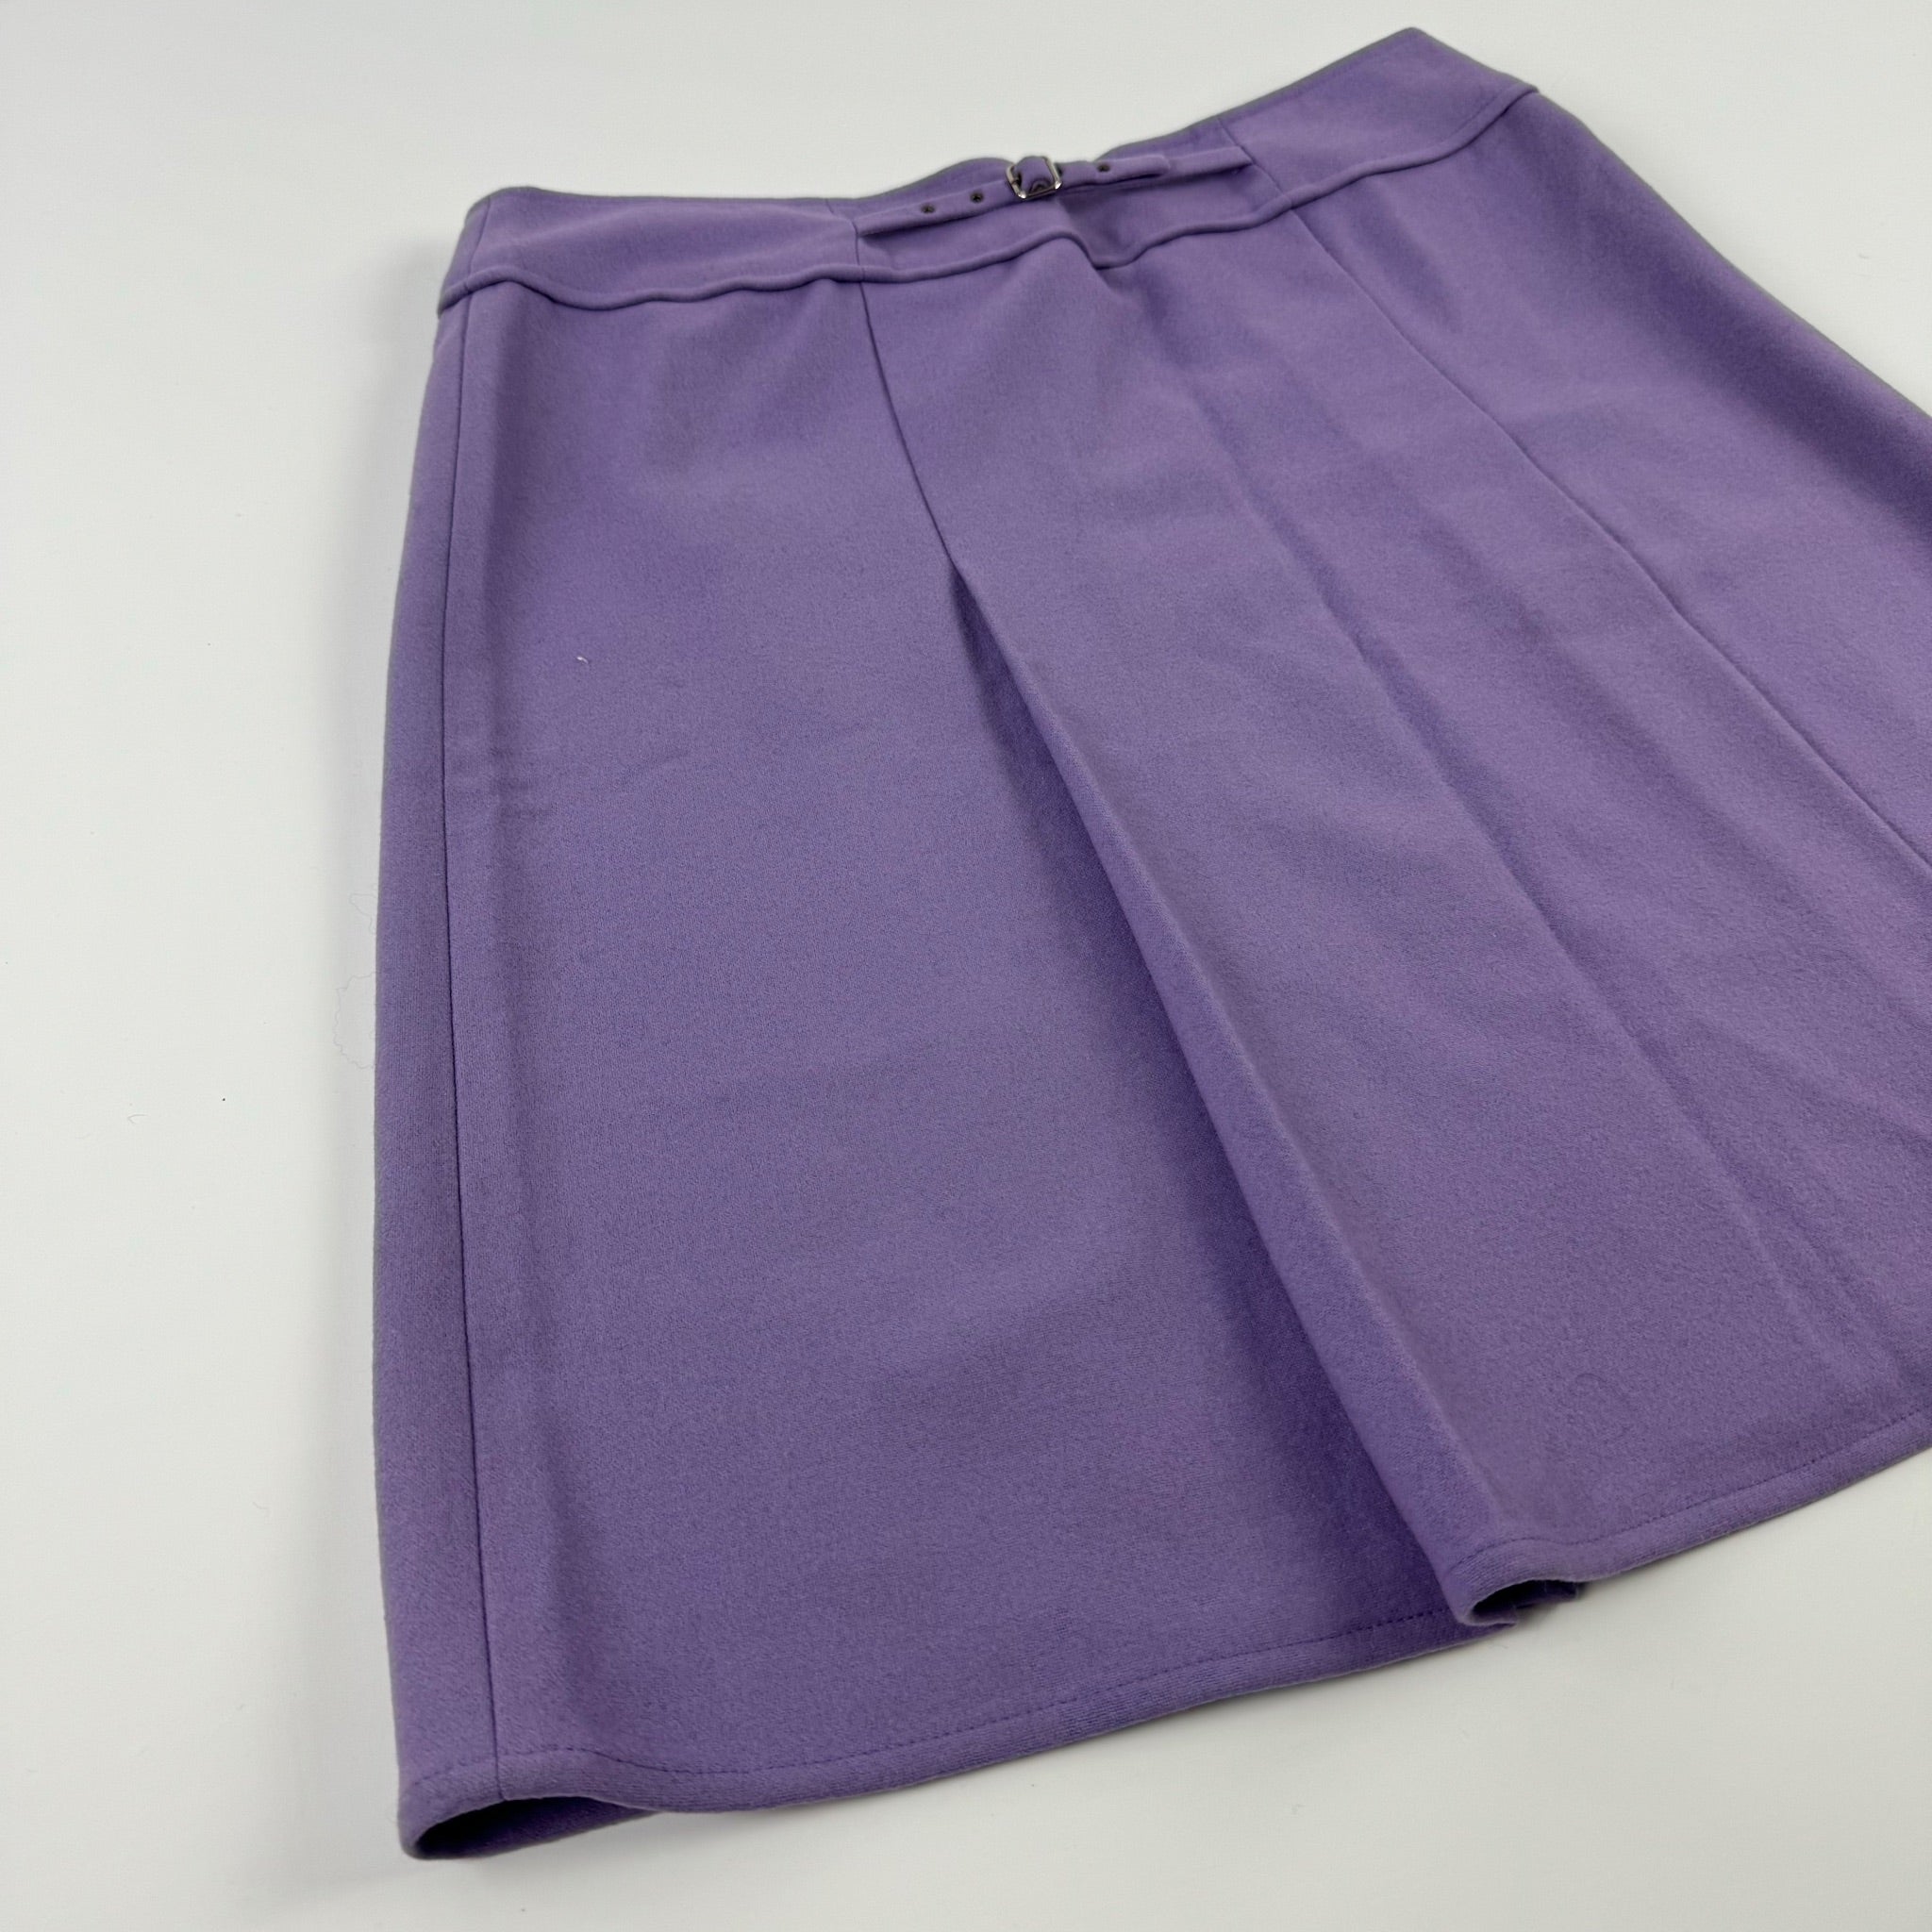 Miu Miu Lavender Wrap-Skirt, 1996 - 7